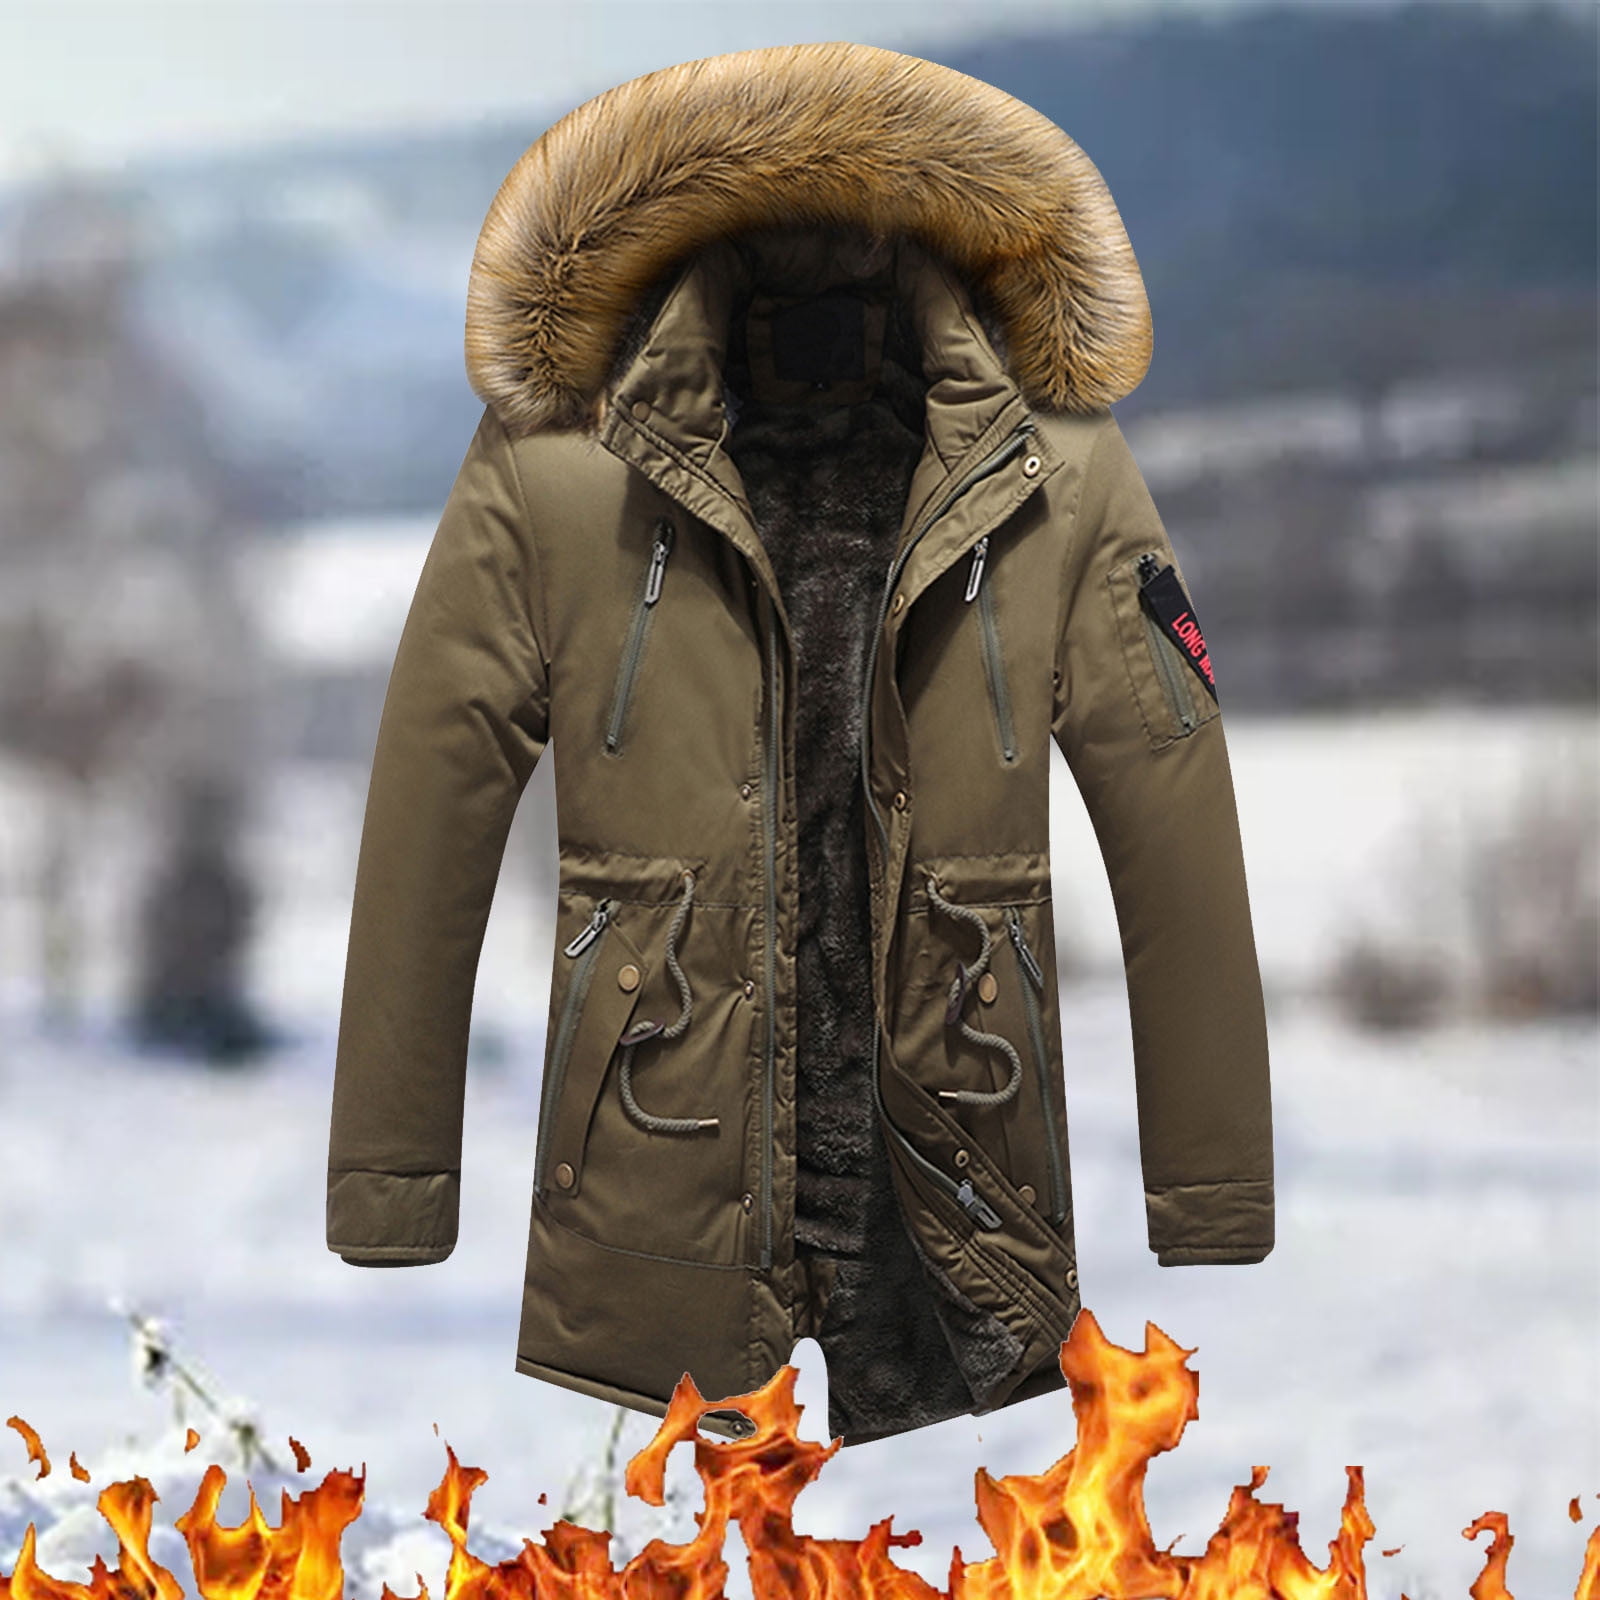 LEEy-world Warm Winter Coats For Men Men's Winter Coats Water Resistant  Snow Ski Jacket Lined Parka Pockets Army Green,XXL